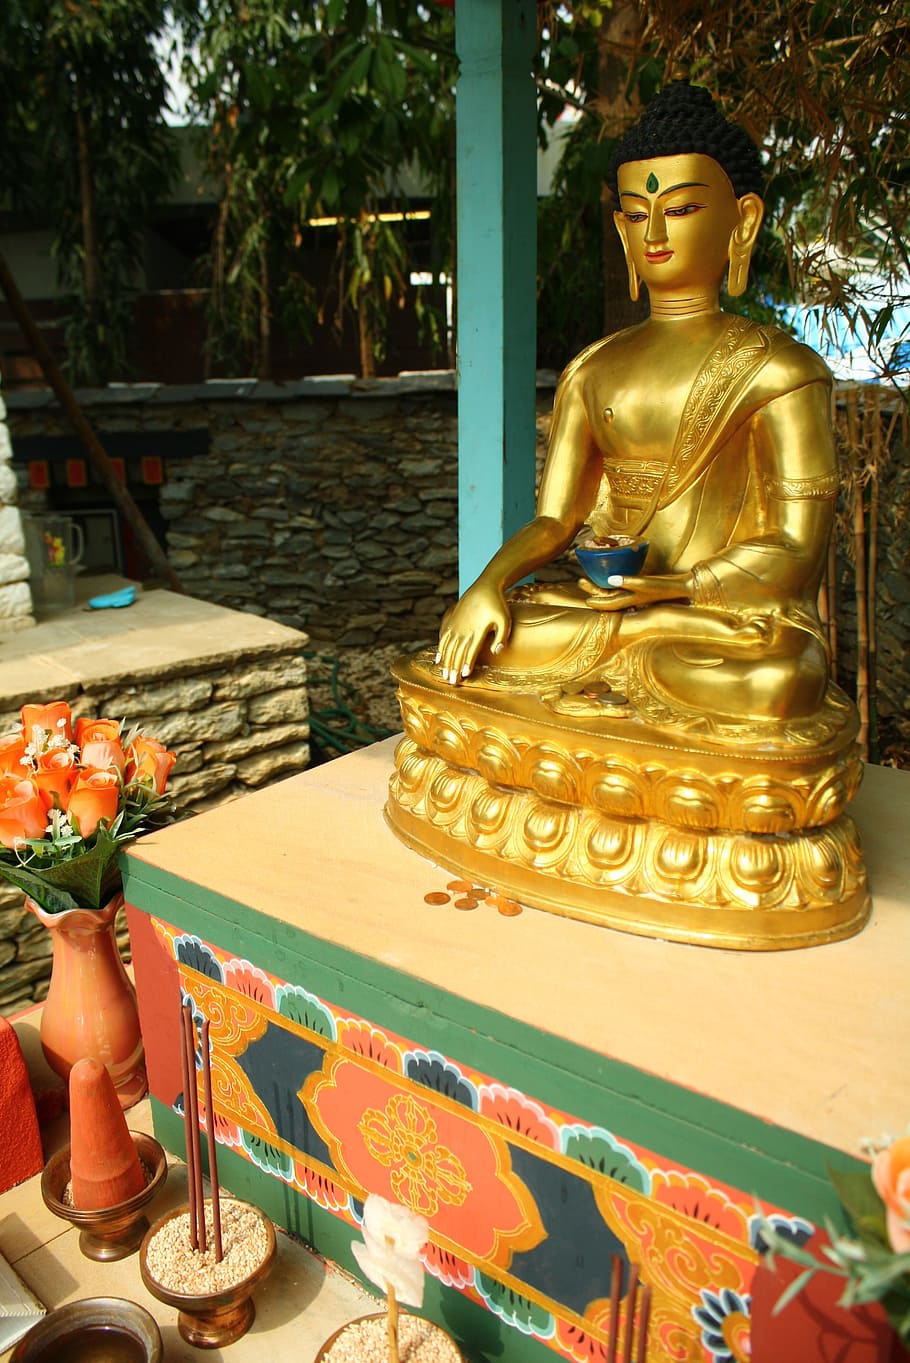 chiang mai, thailand, garden, belief, sculpture, religion, spirituality, statue, representation, gold colored